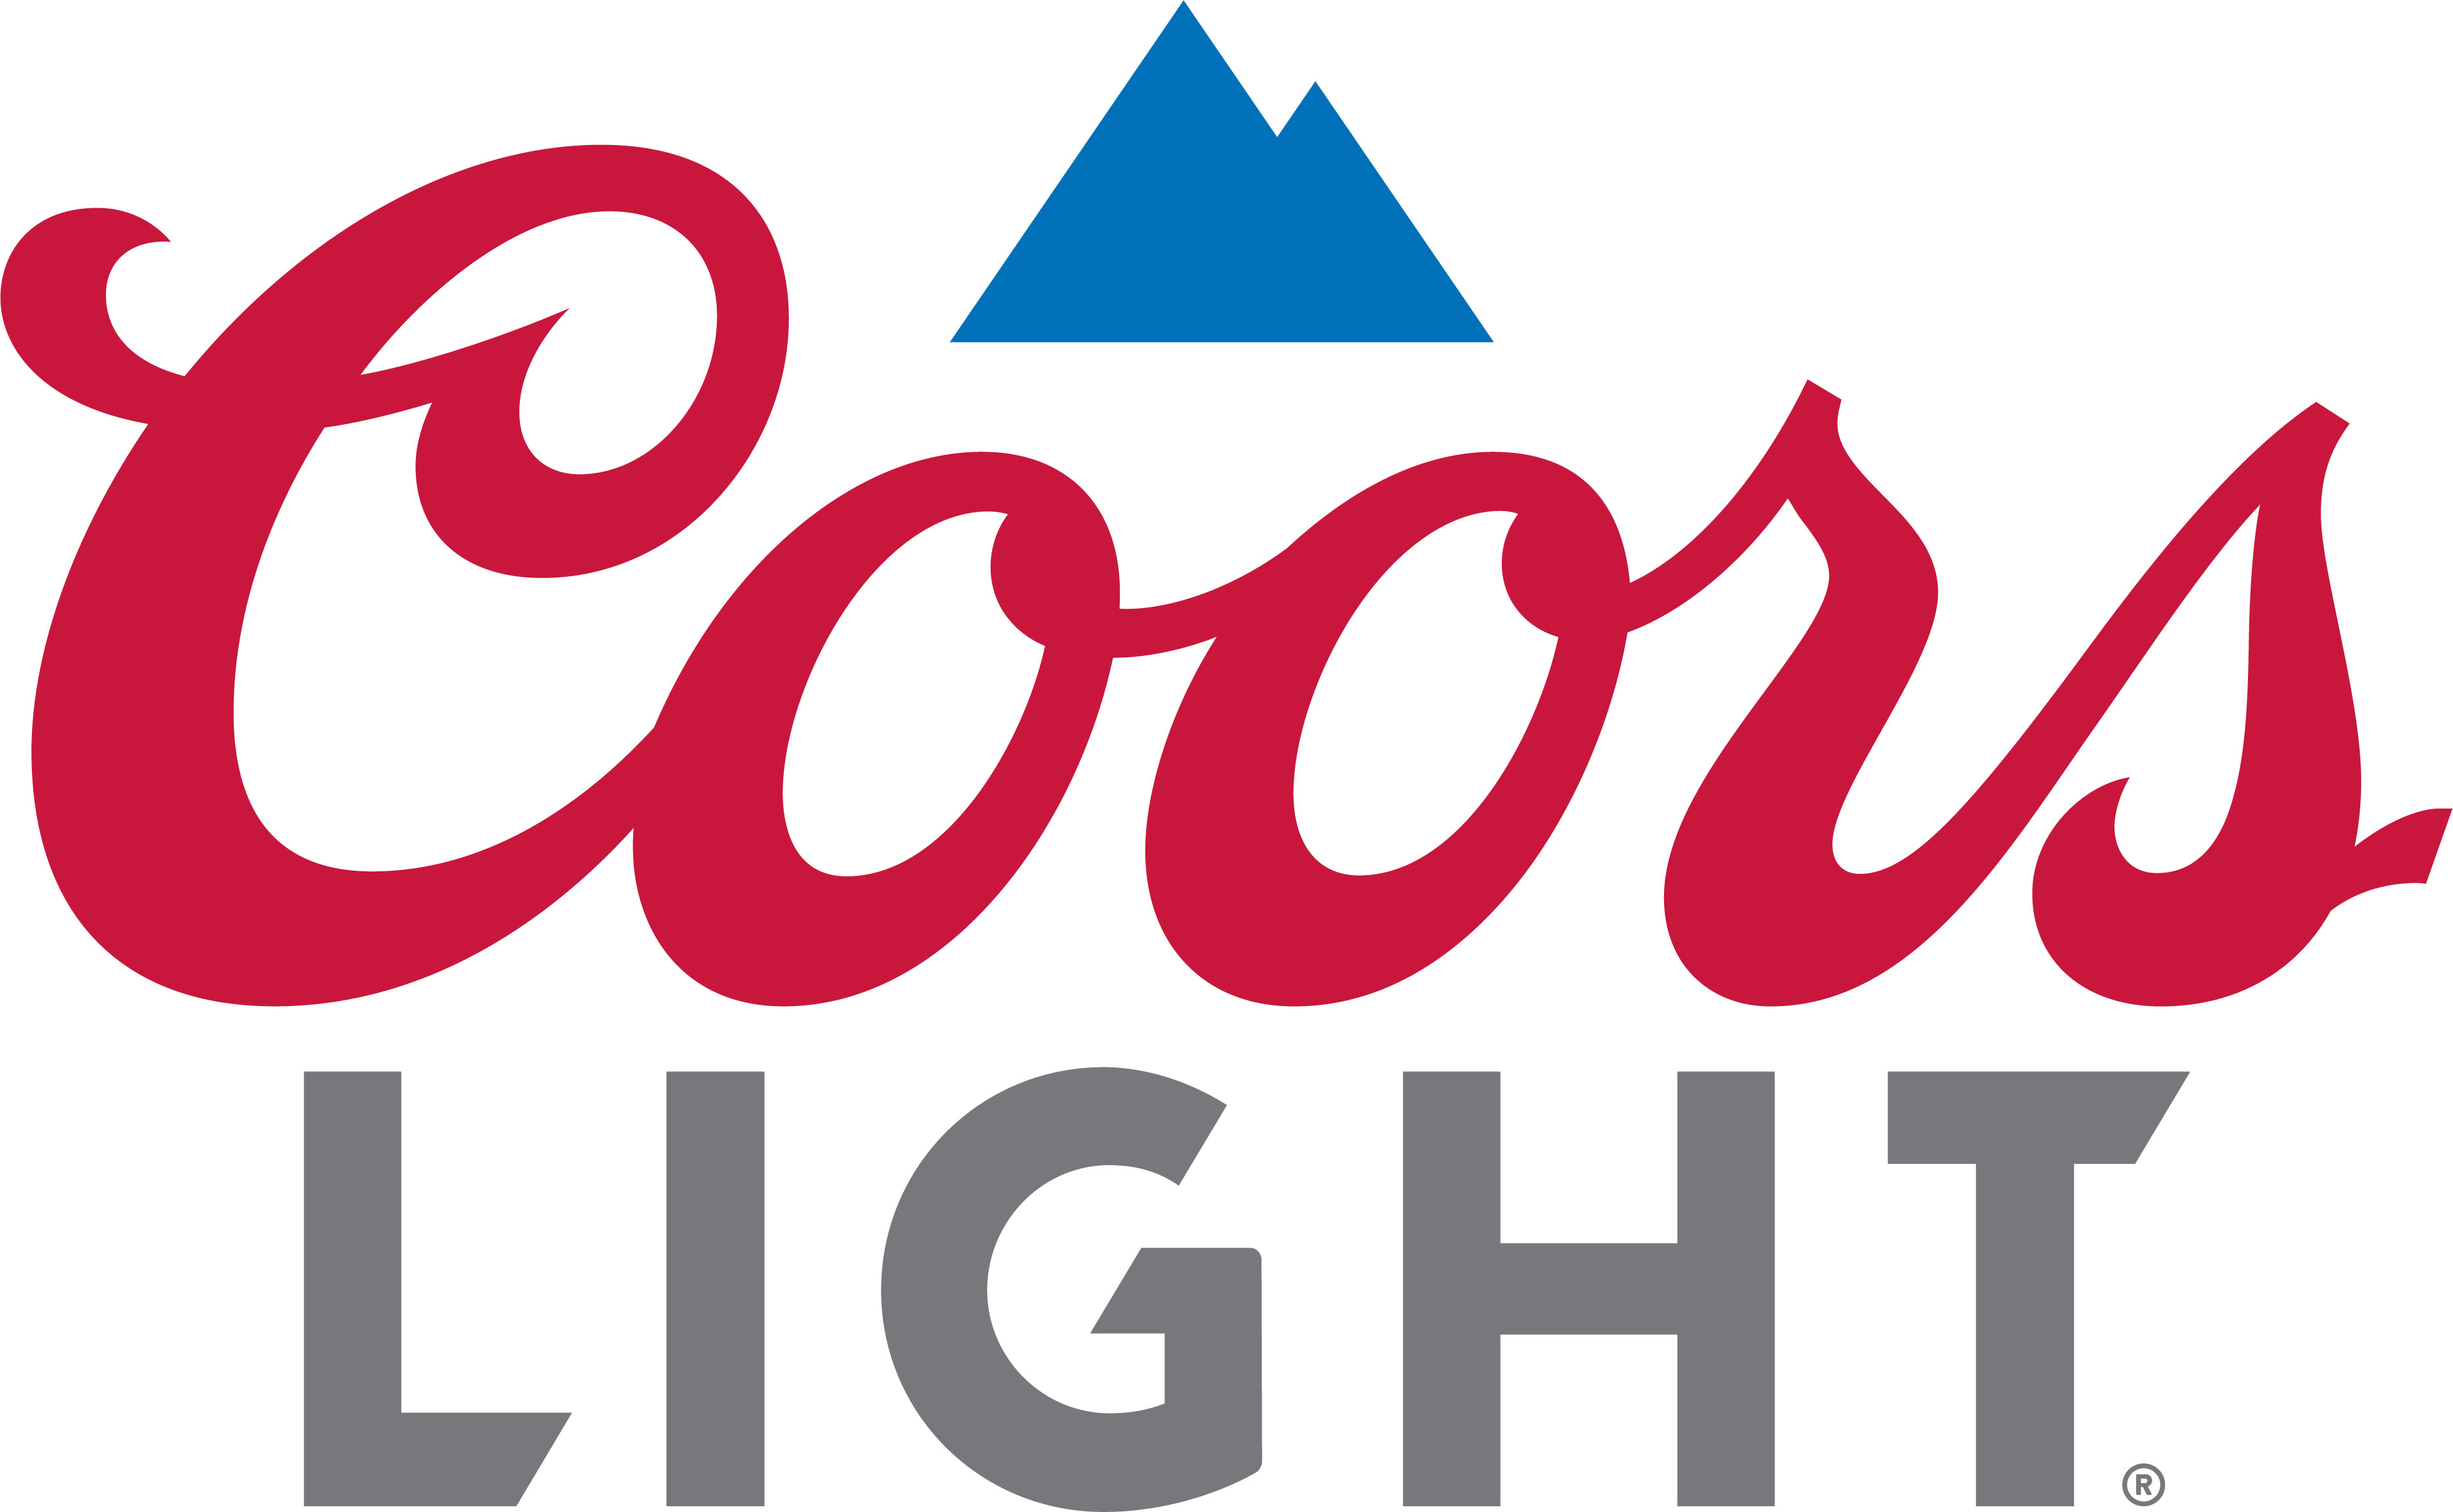 Coors Light Thirst Aid Kit